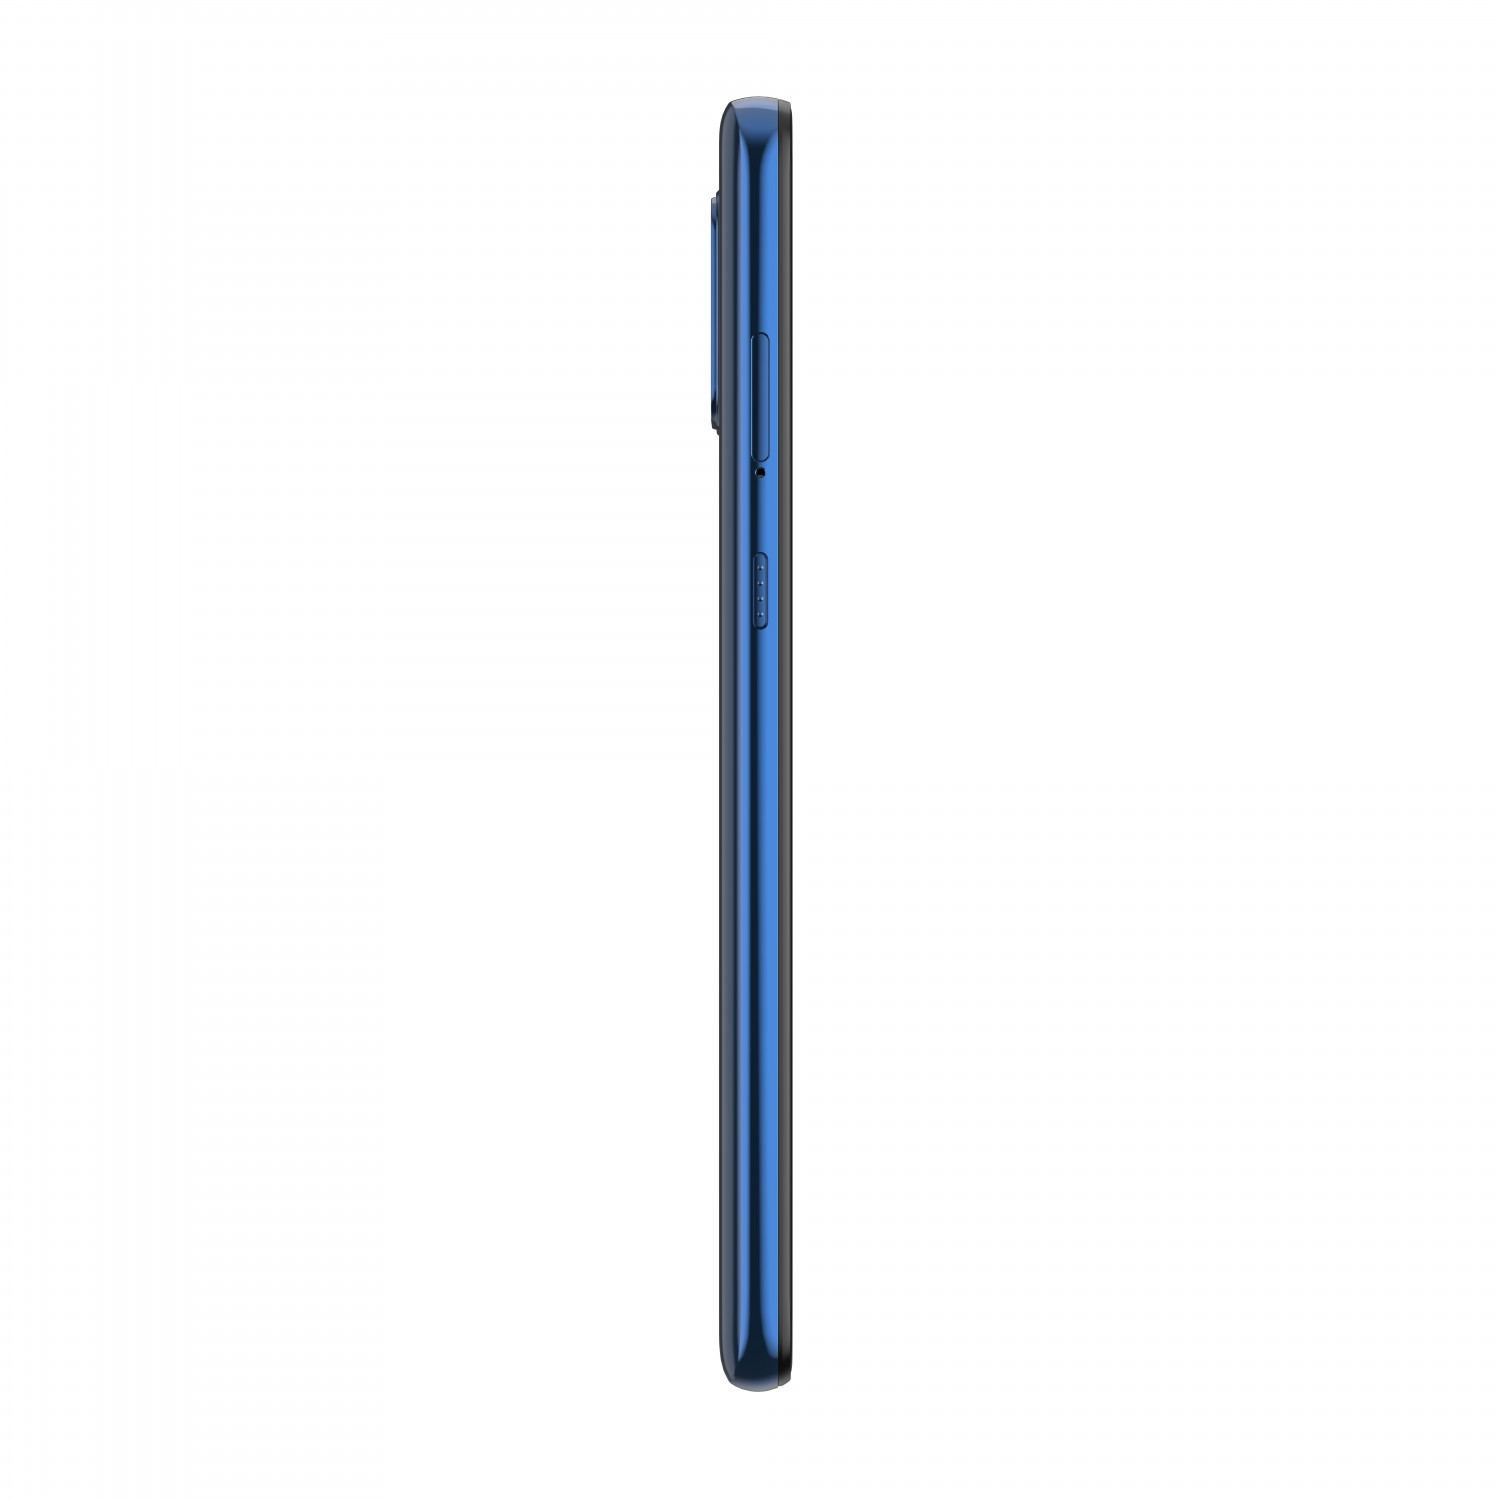 Motorola Moto G9 Plus 4GB/128GB modrá